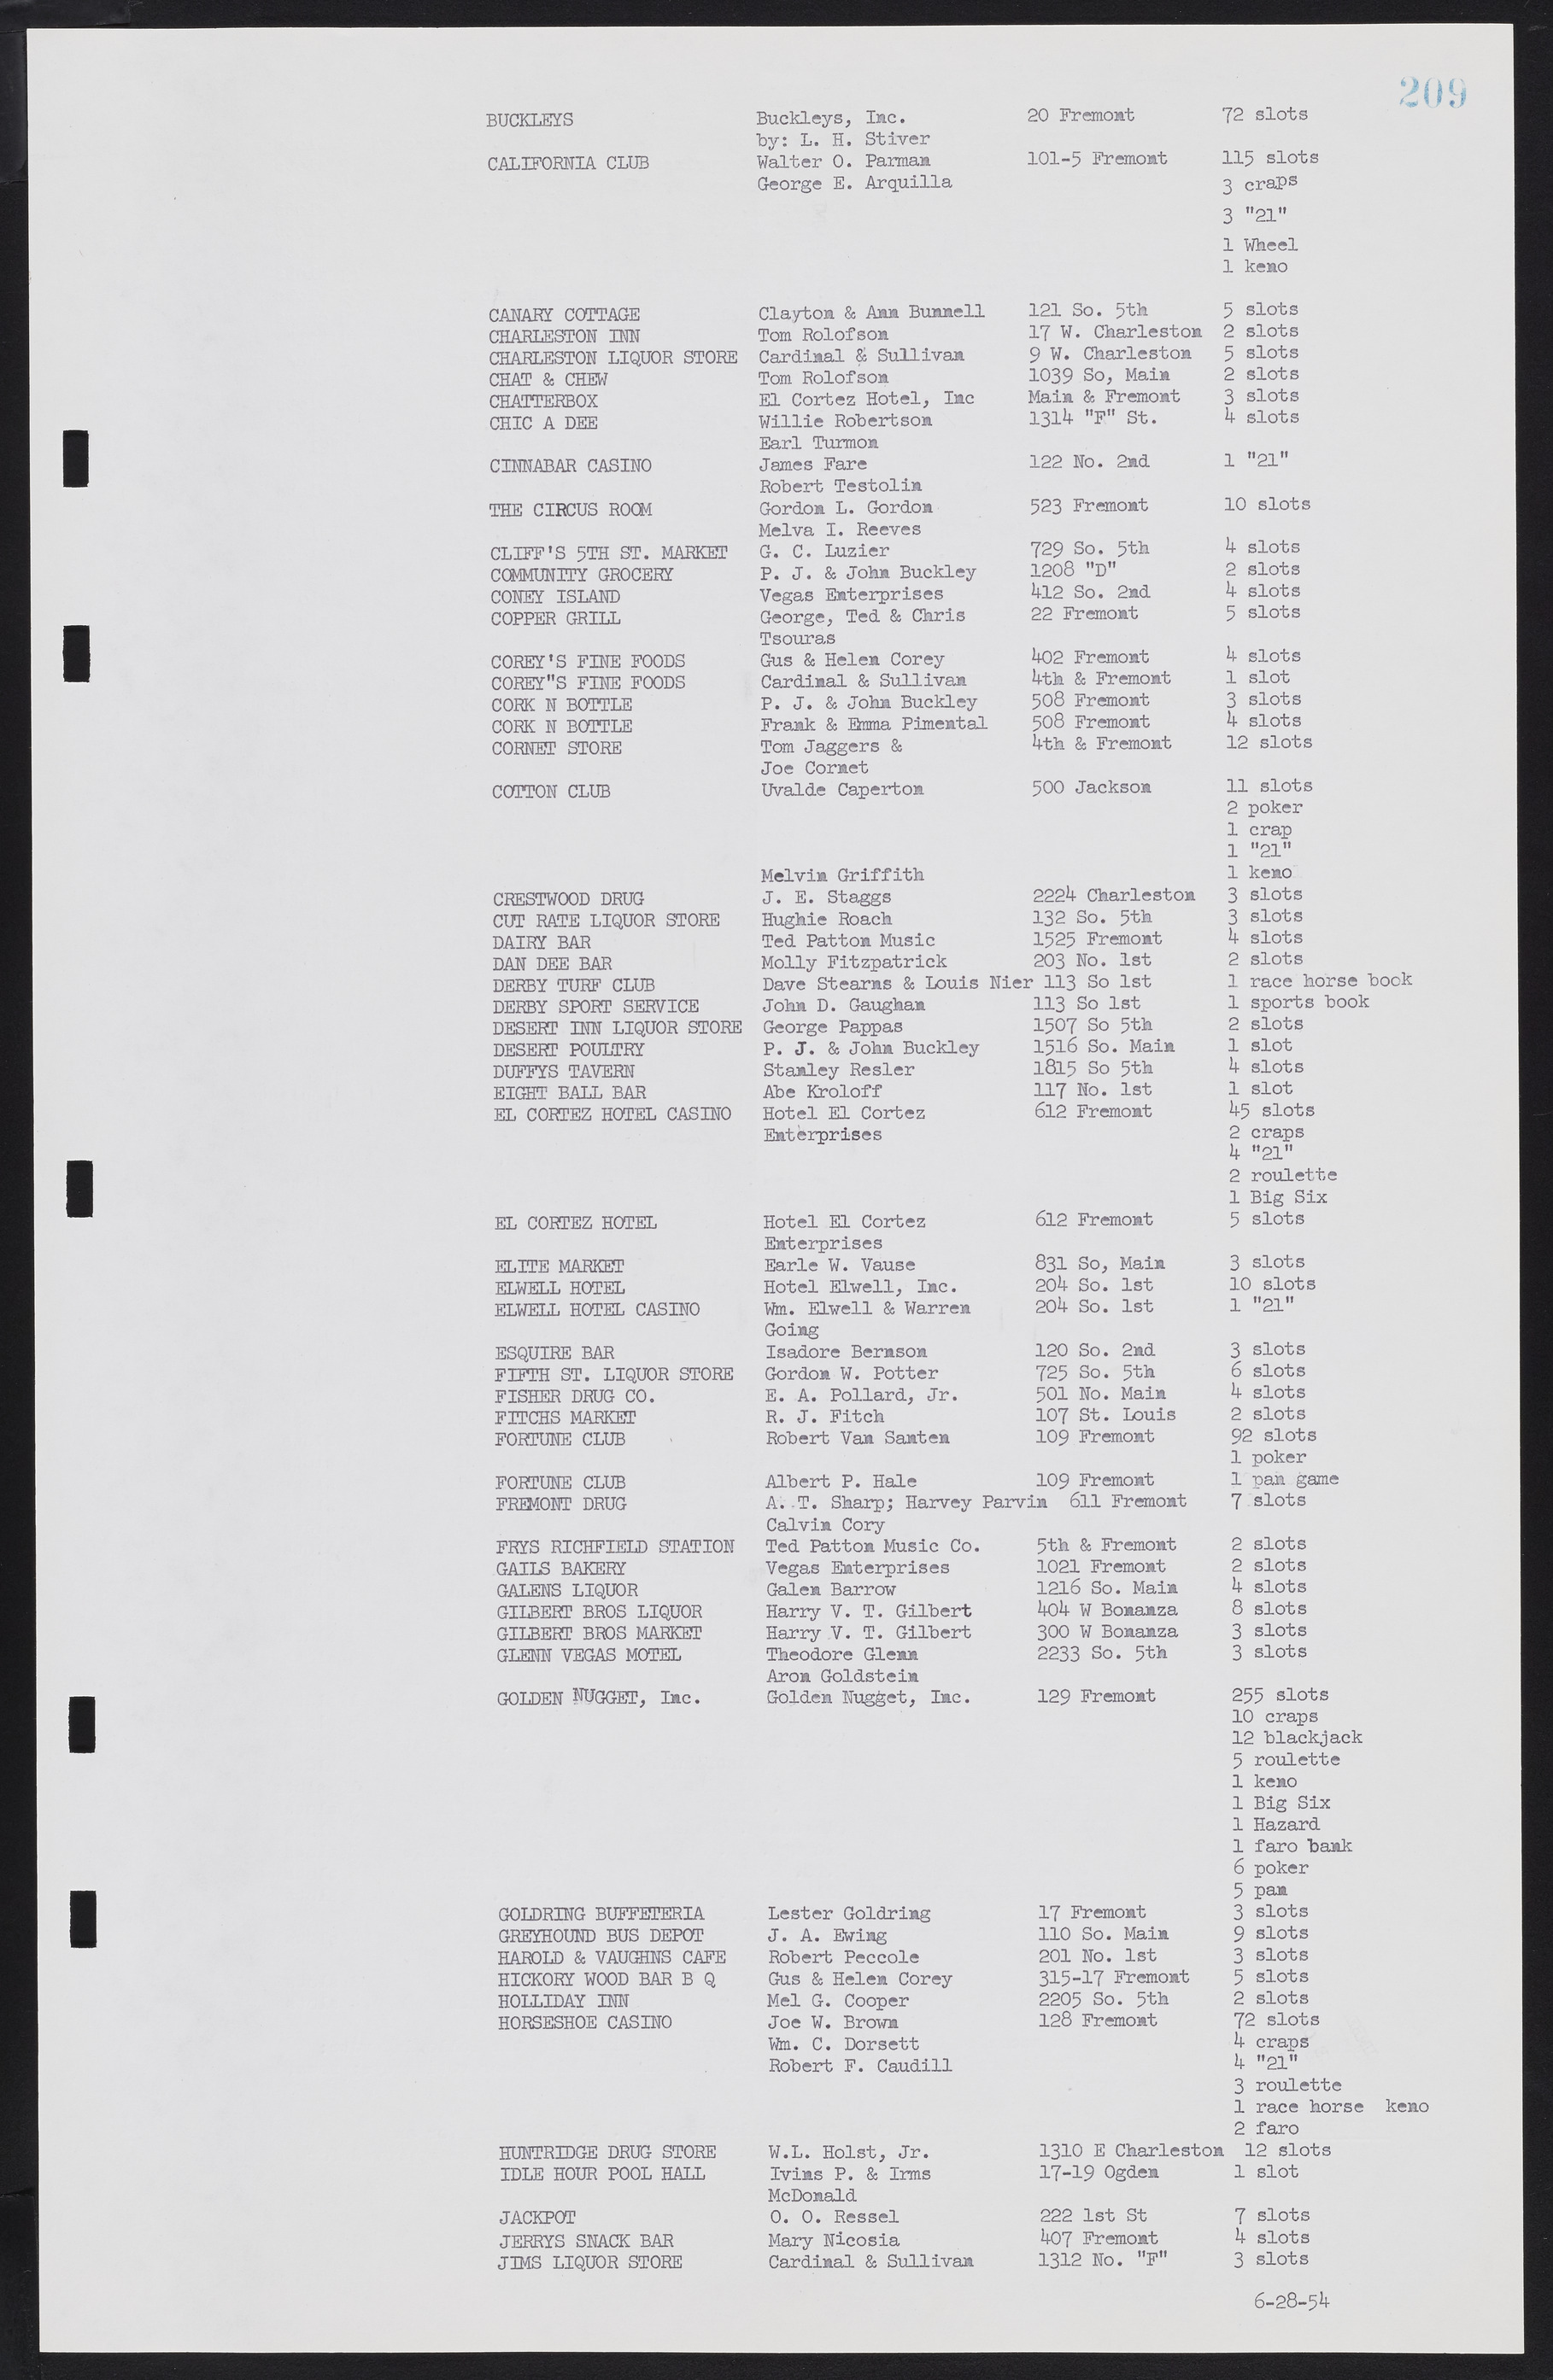 Las Vegas City Commission Minutes, February 17, 1954 to September 21, 1955, lvc000009-215